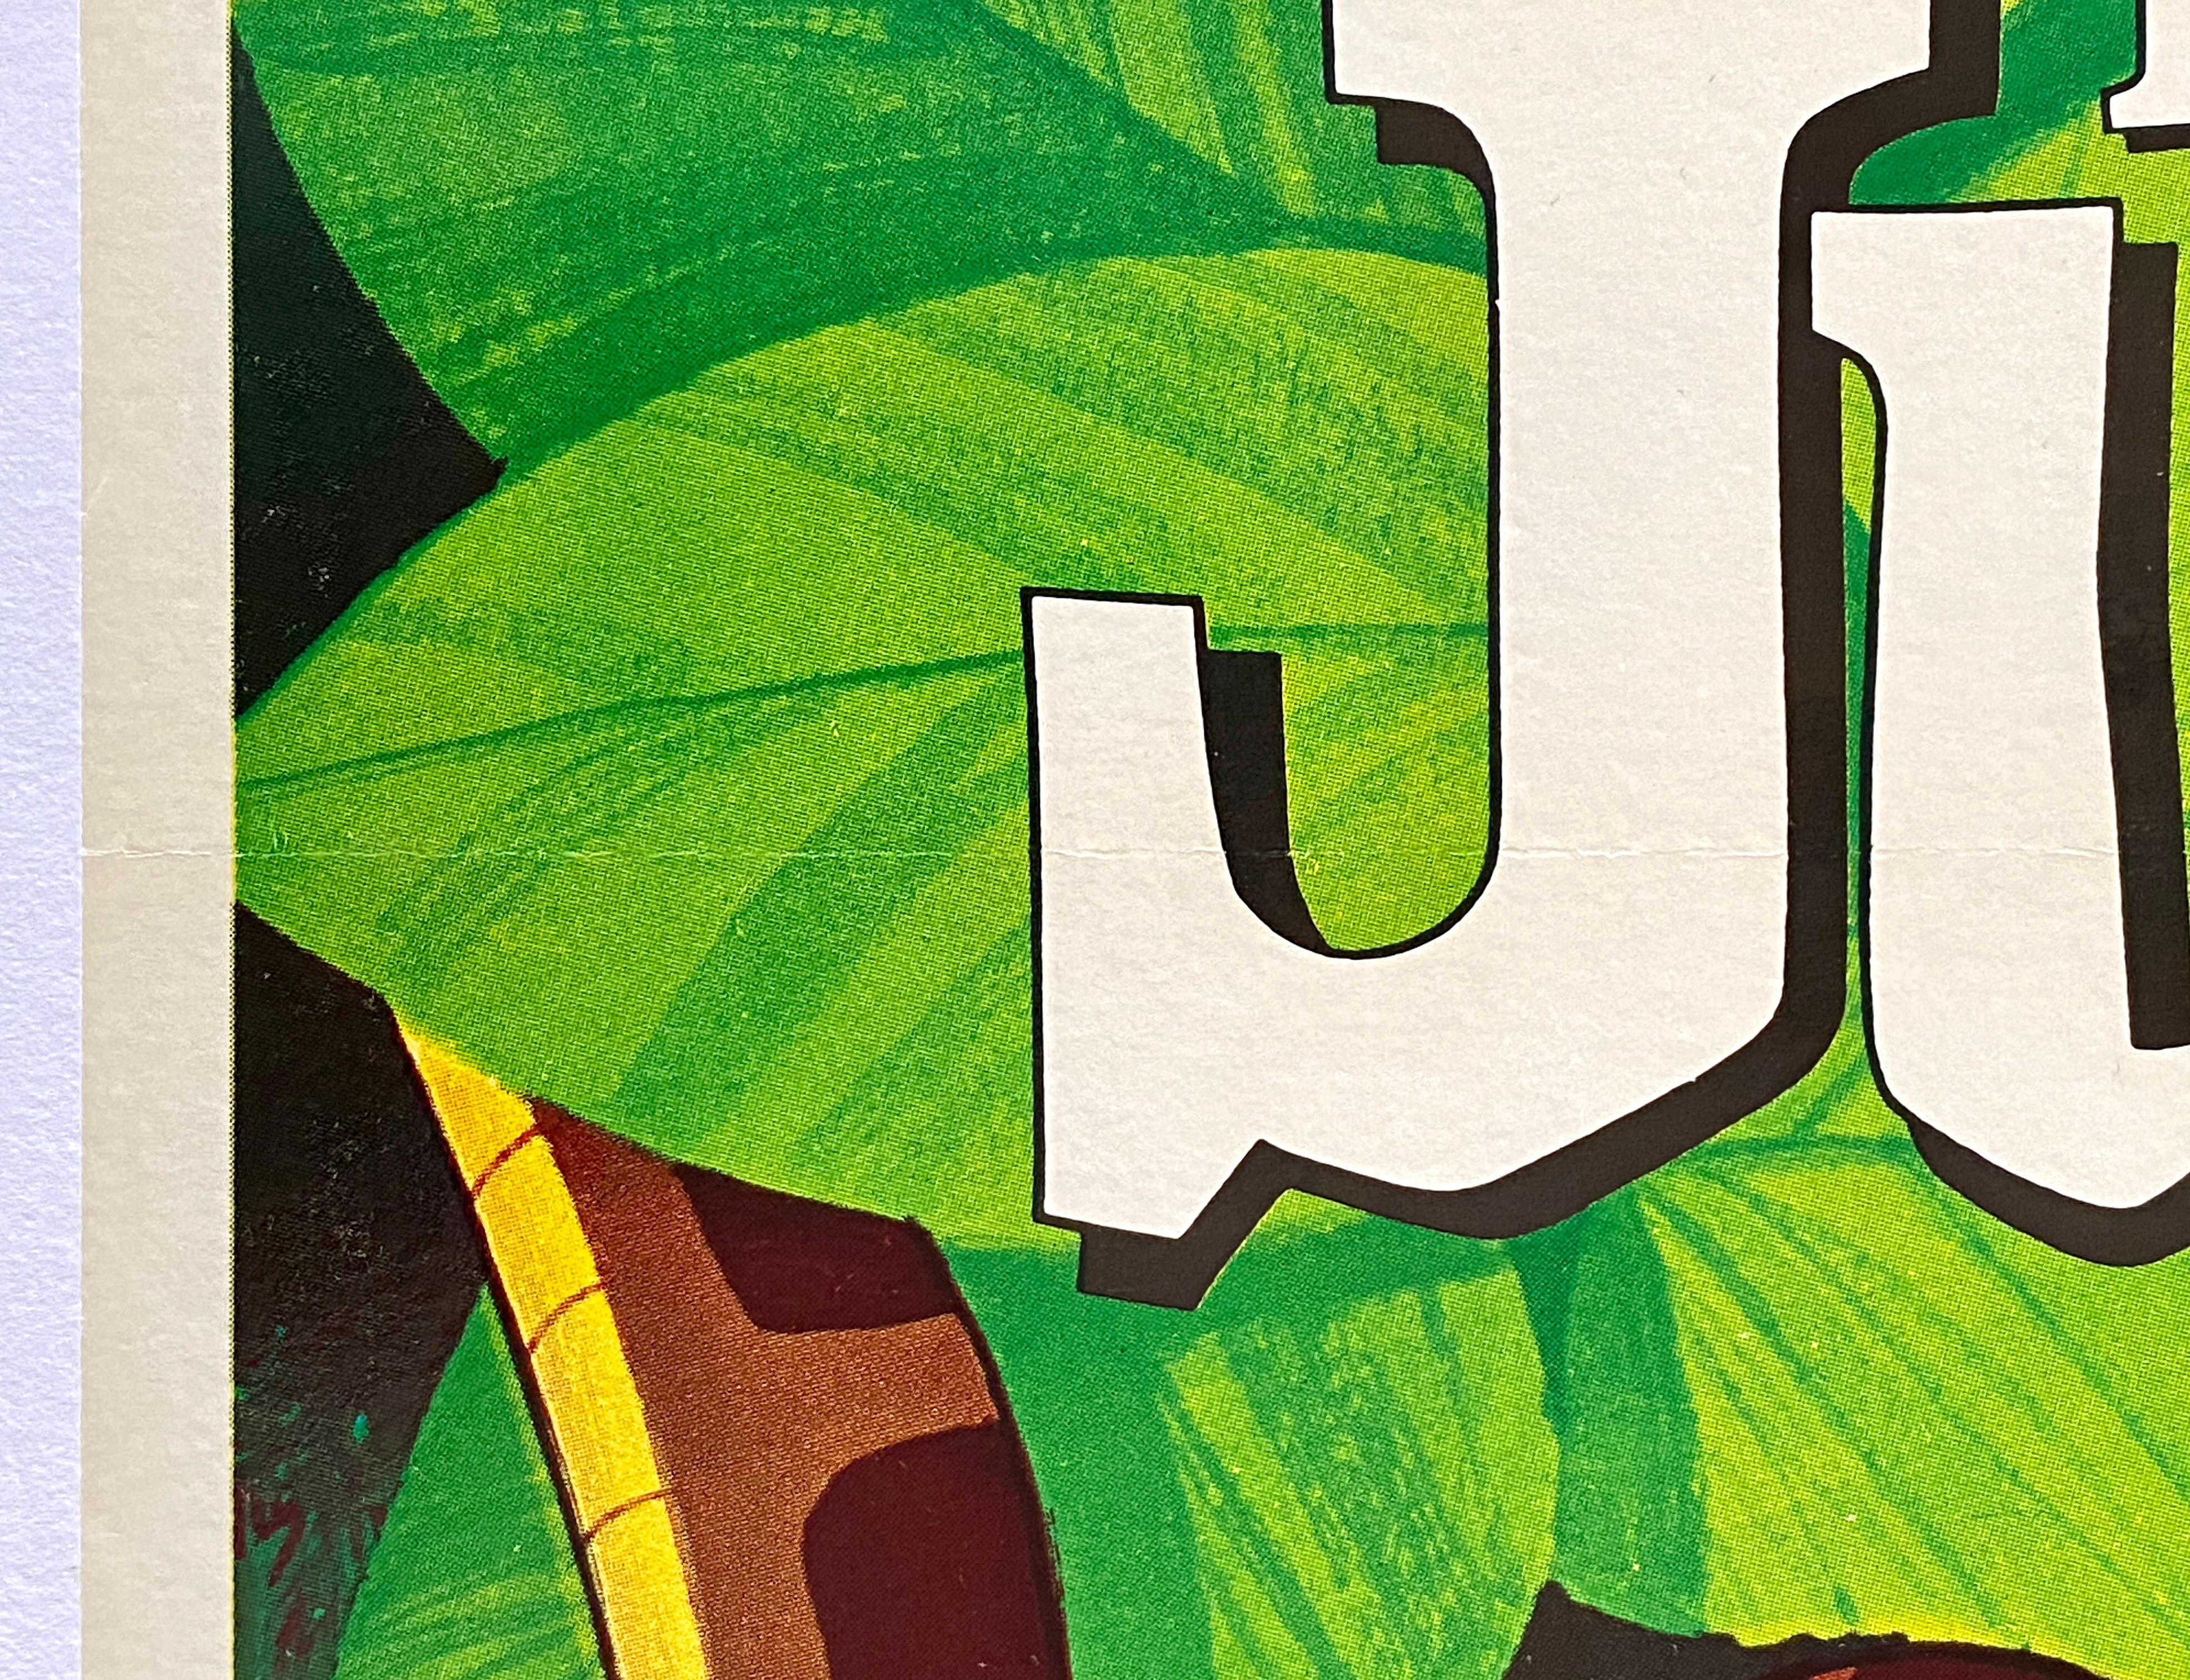 'The Jungle Book' Original Vintage Movie Poster, American, 1967 2